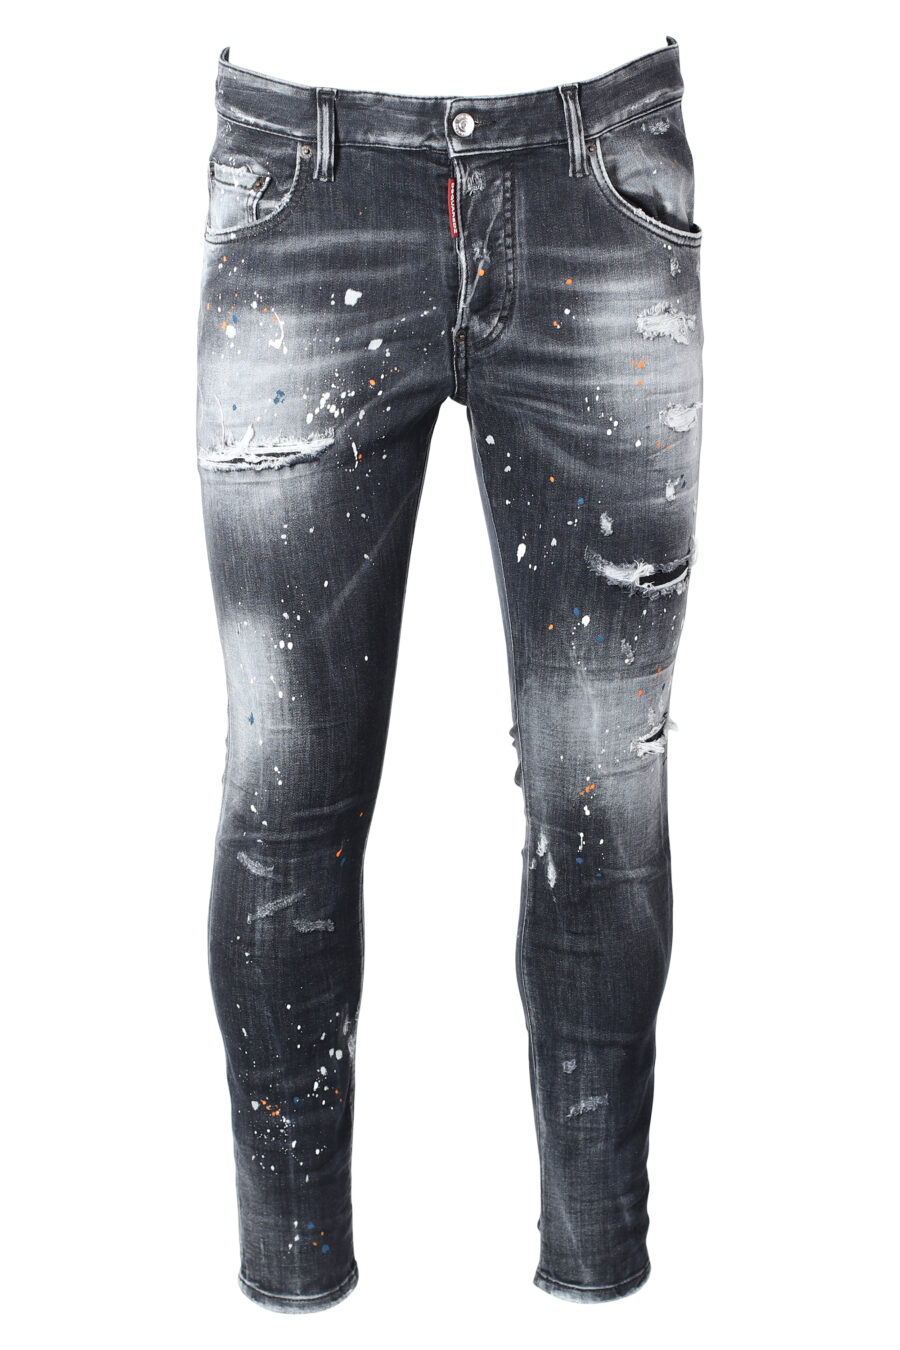 Schwarze "super twinky jean" getragene und zerrissene Jeans - IMG 9888